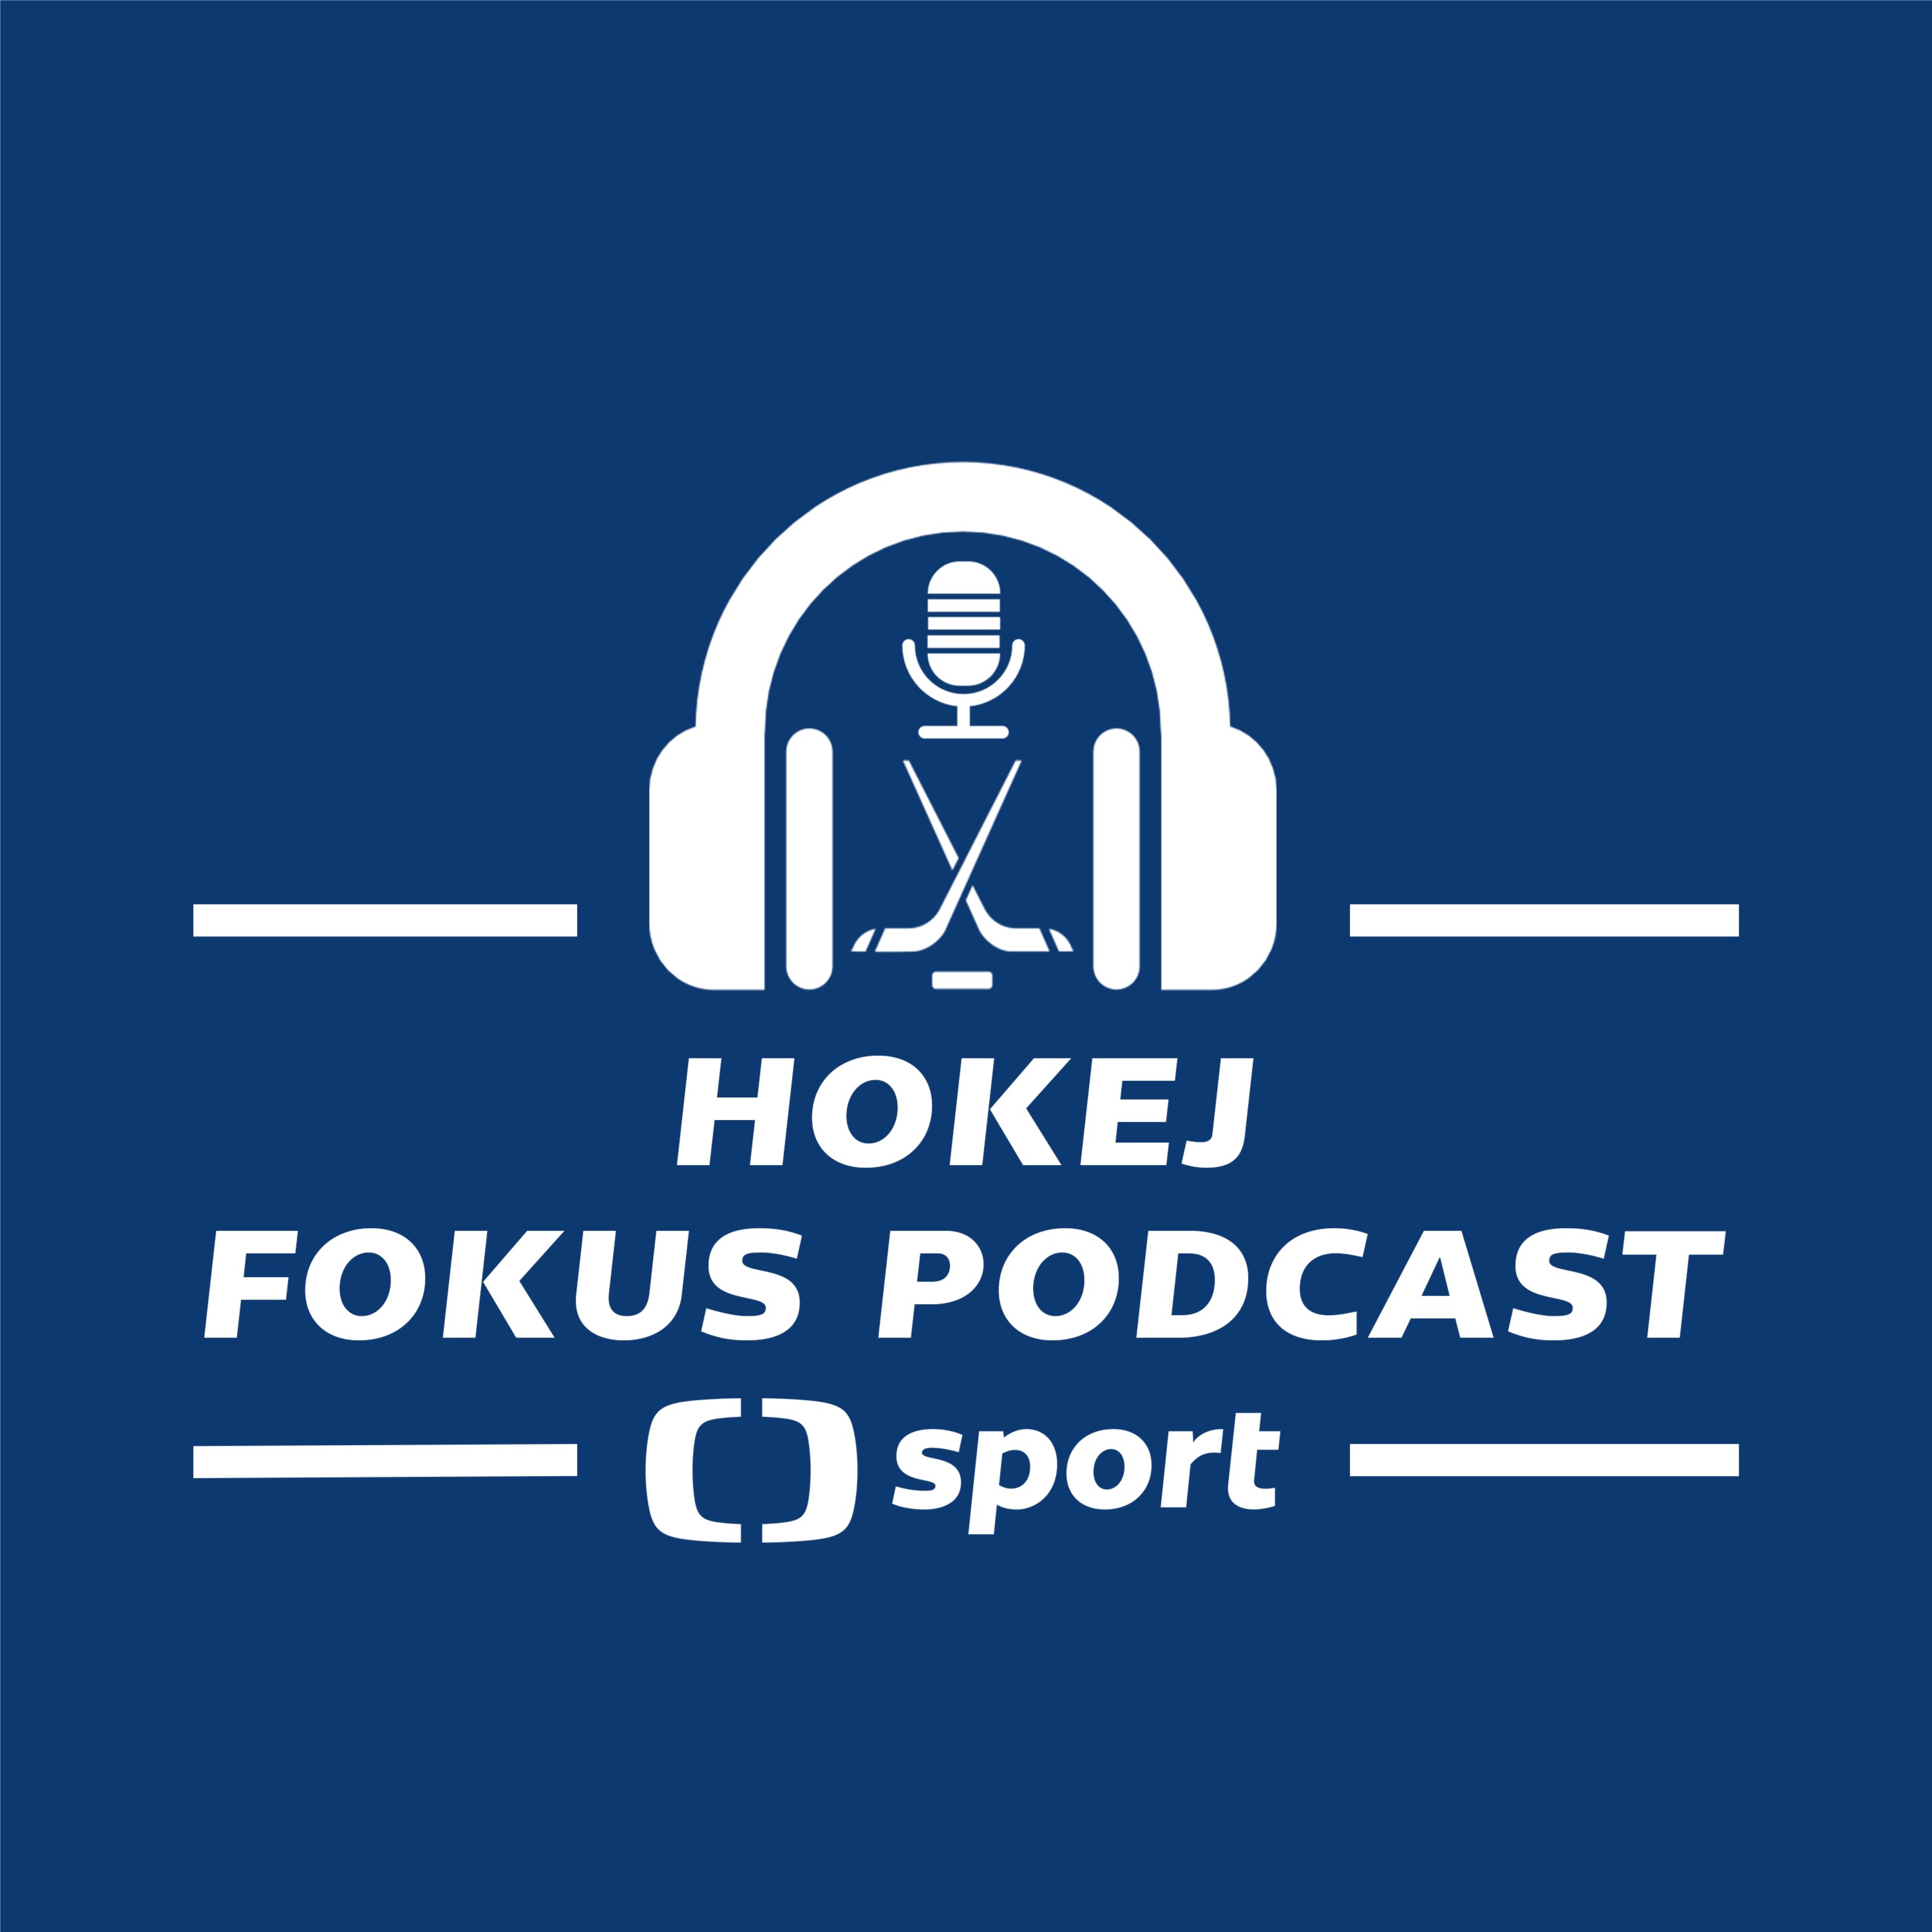 Hokej fokus podcast: Budoucnost Vegas a Islanders a predikce finále Stanley Cupu